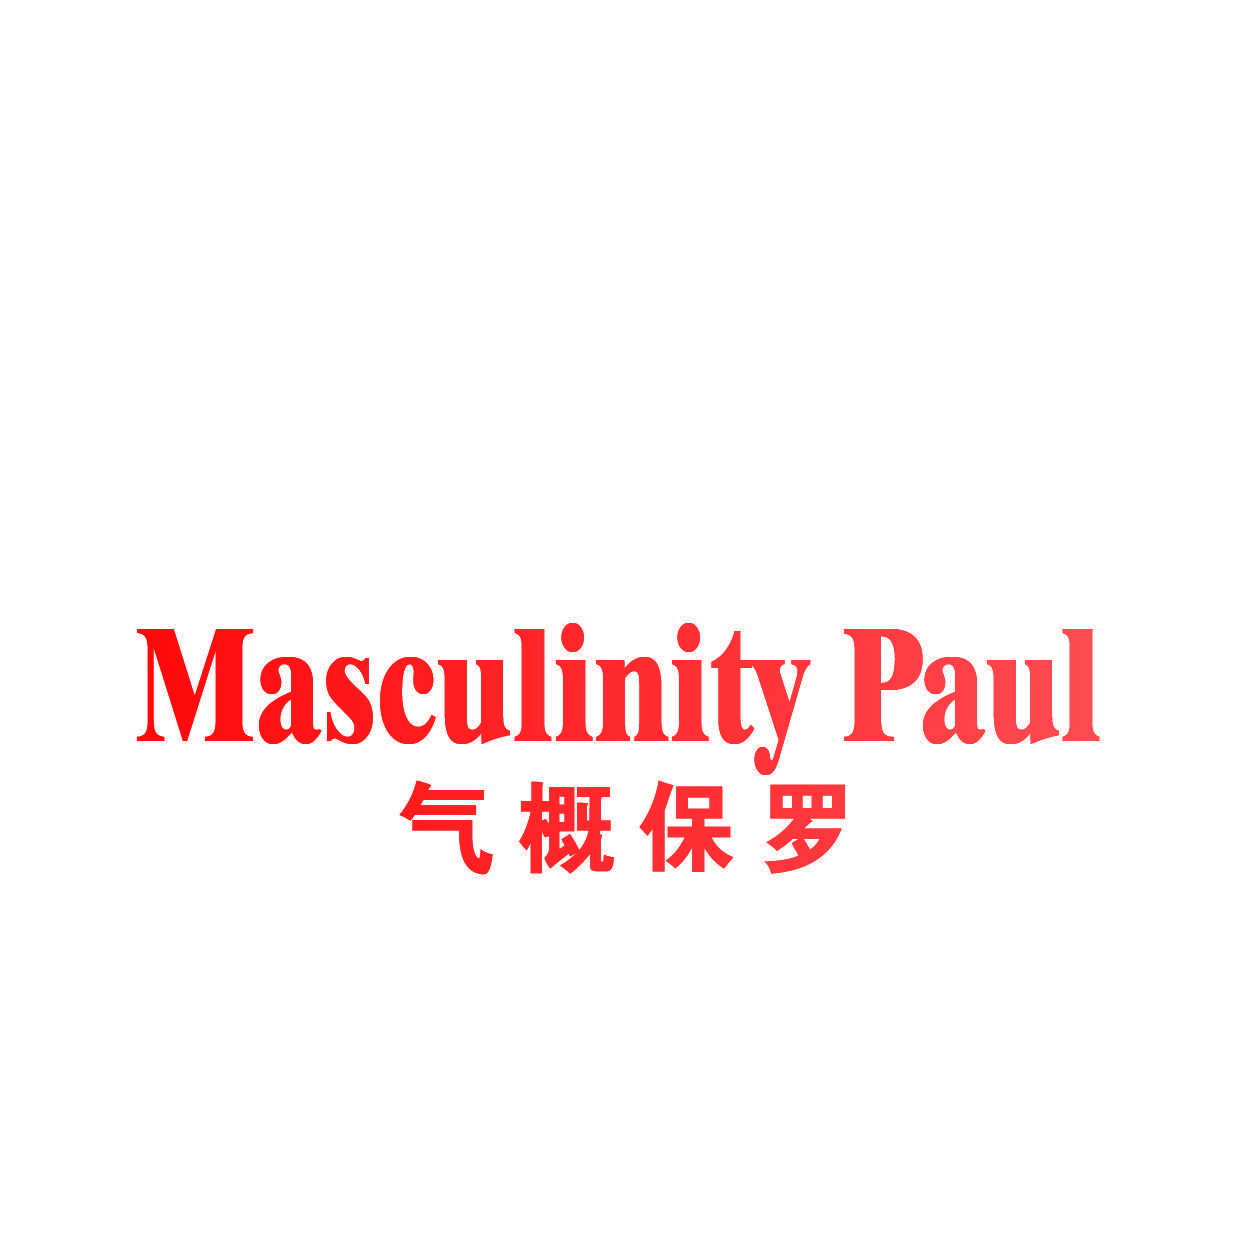 MASCULINITY PAUL 气概保罗